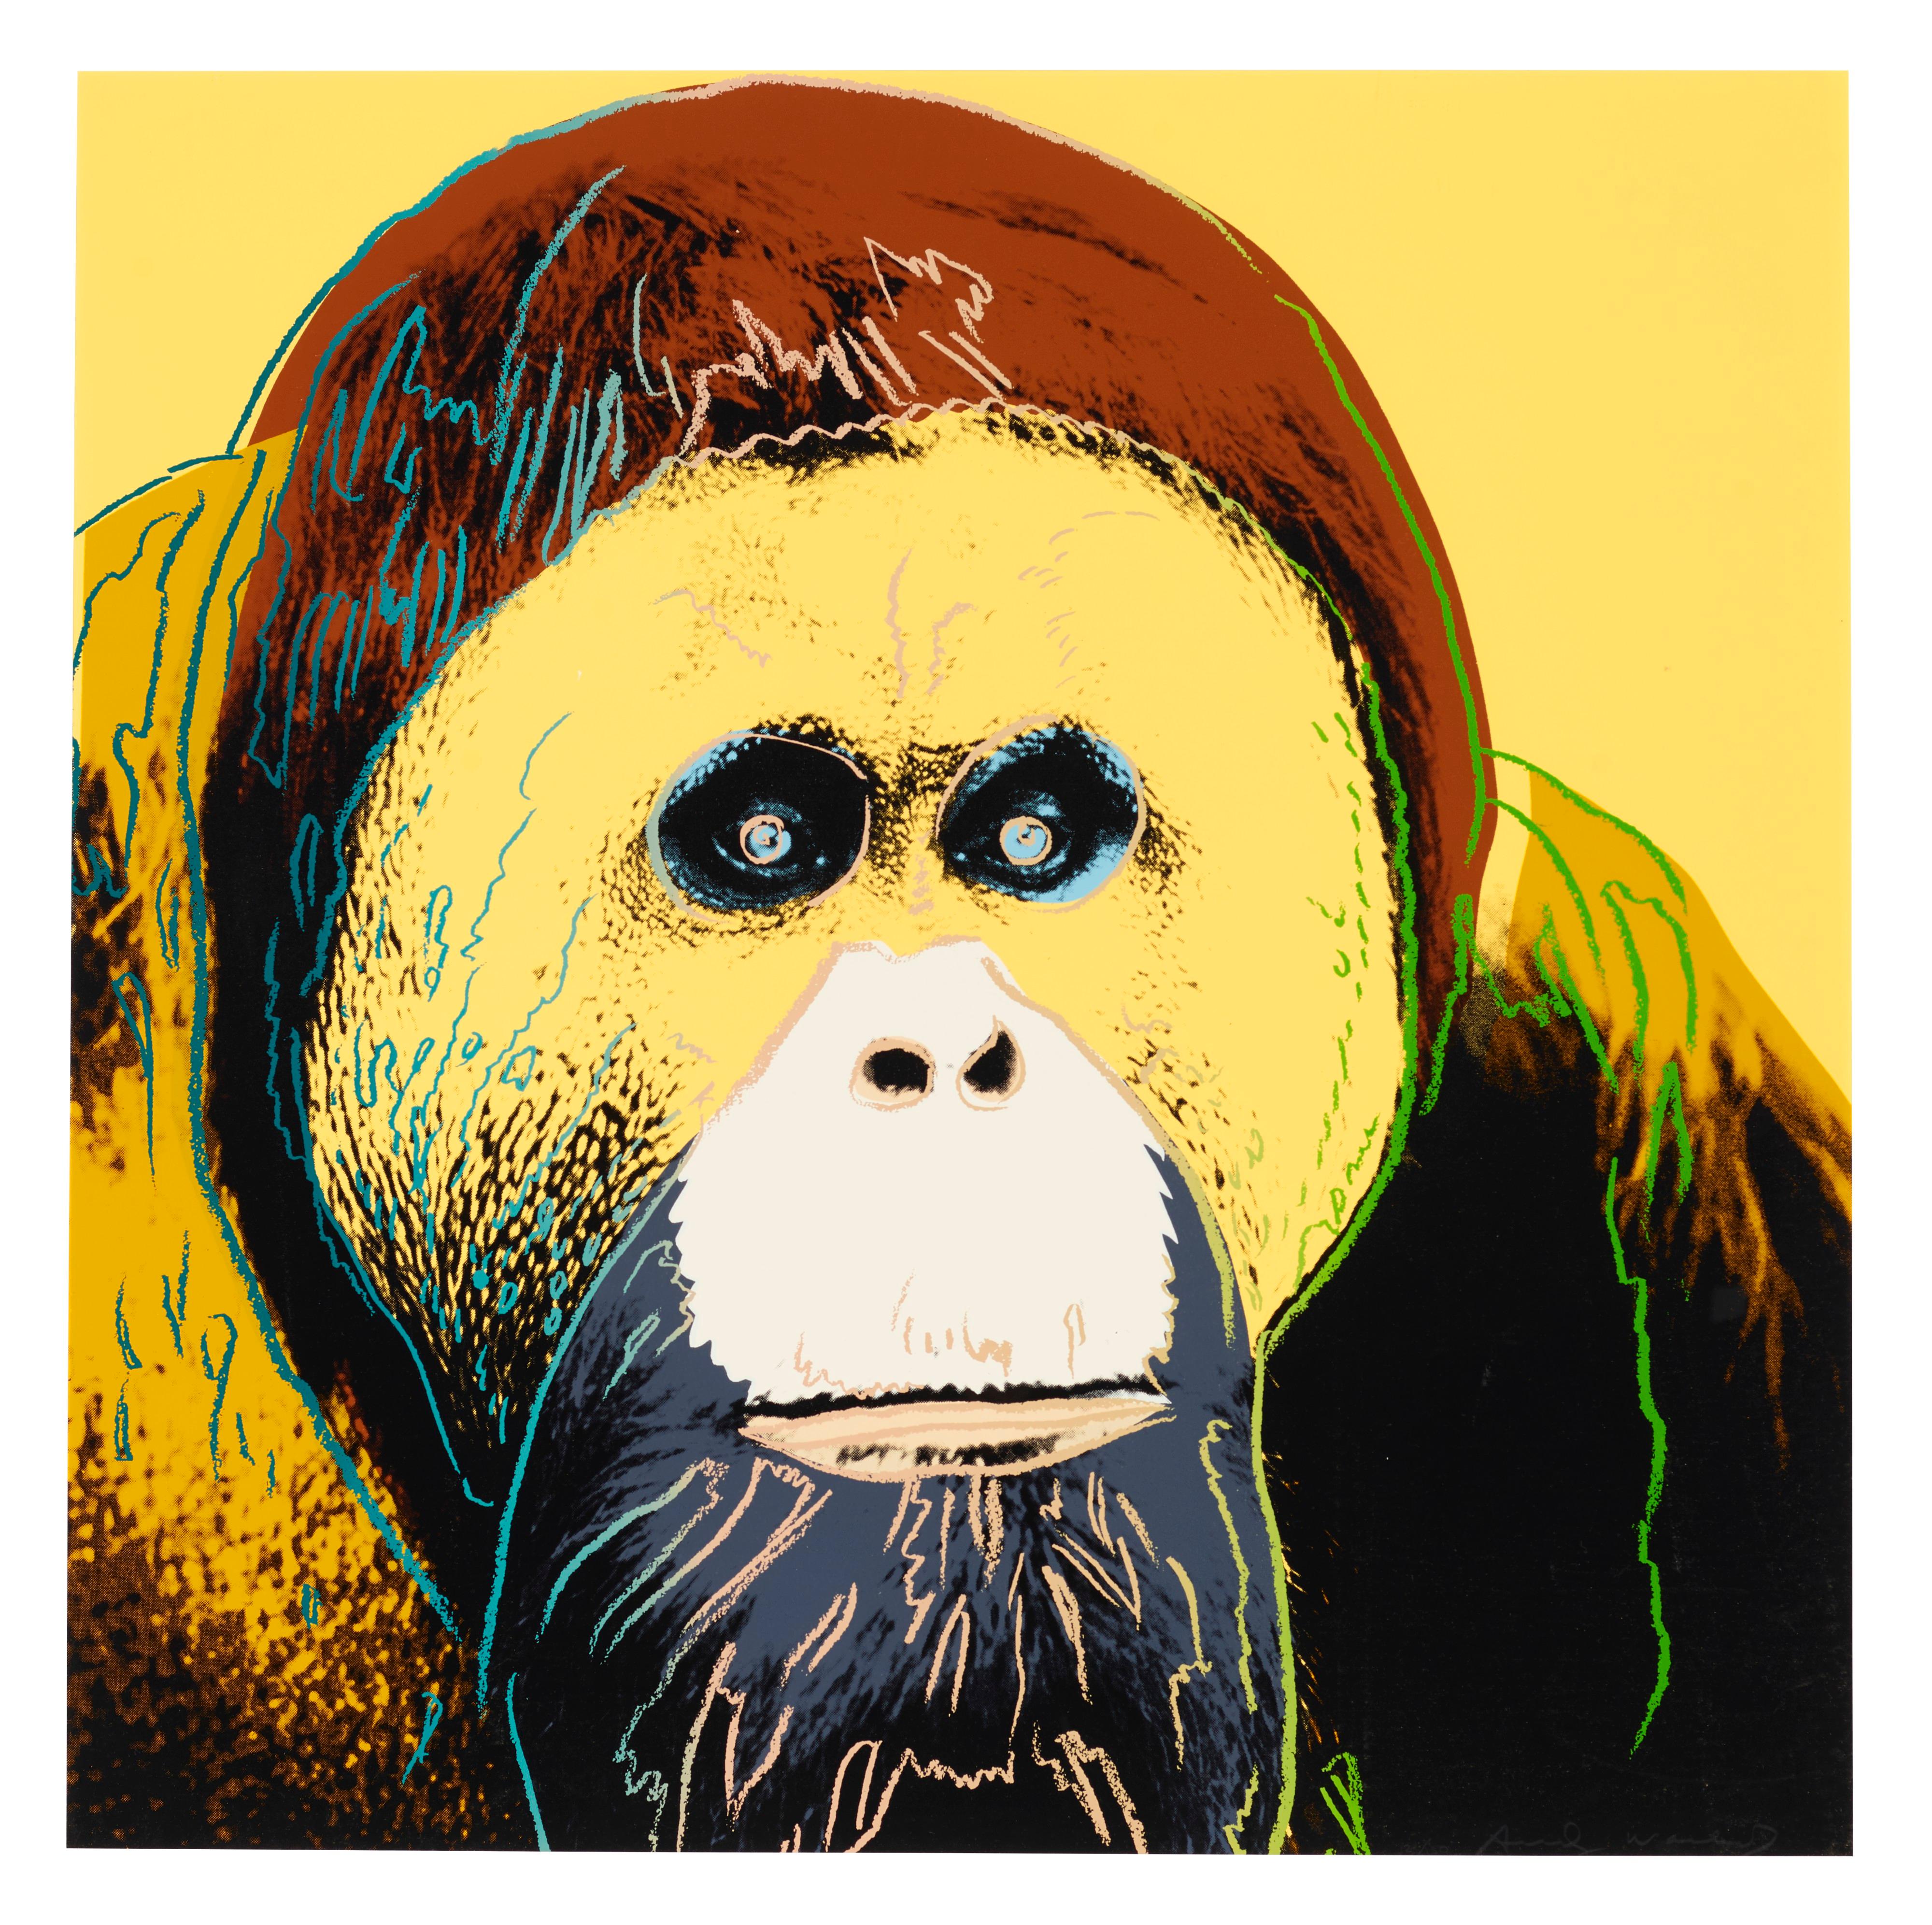 Andy Warhol Portrait Print - Orangutan, Endangered Species F&S II.299